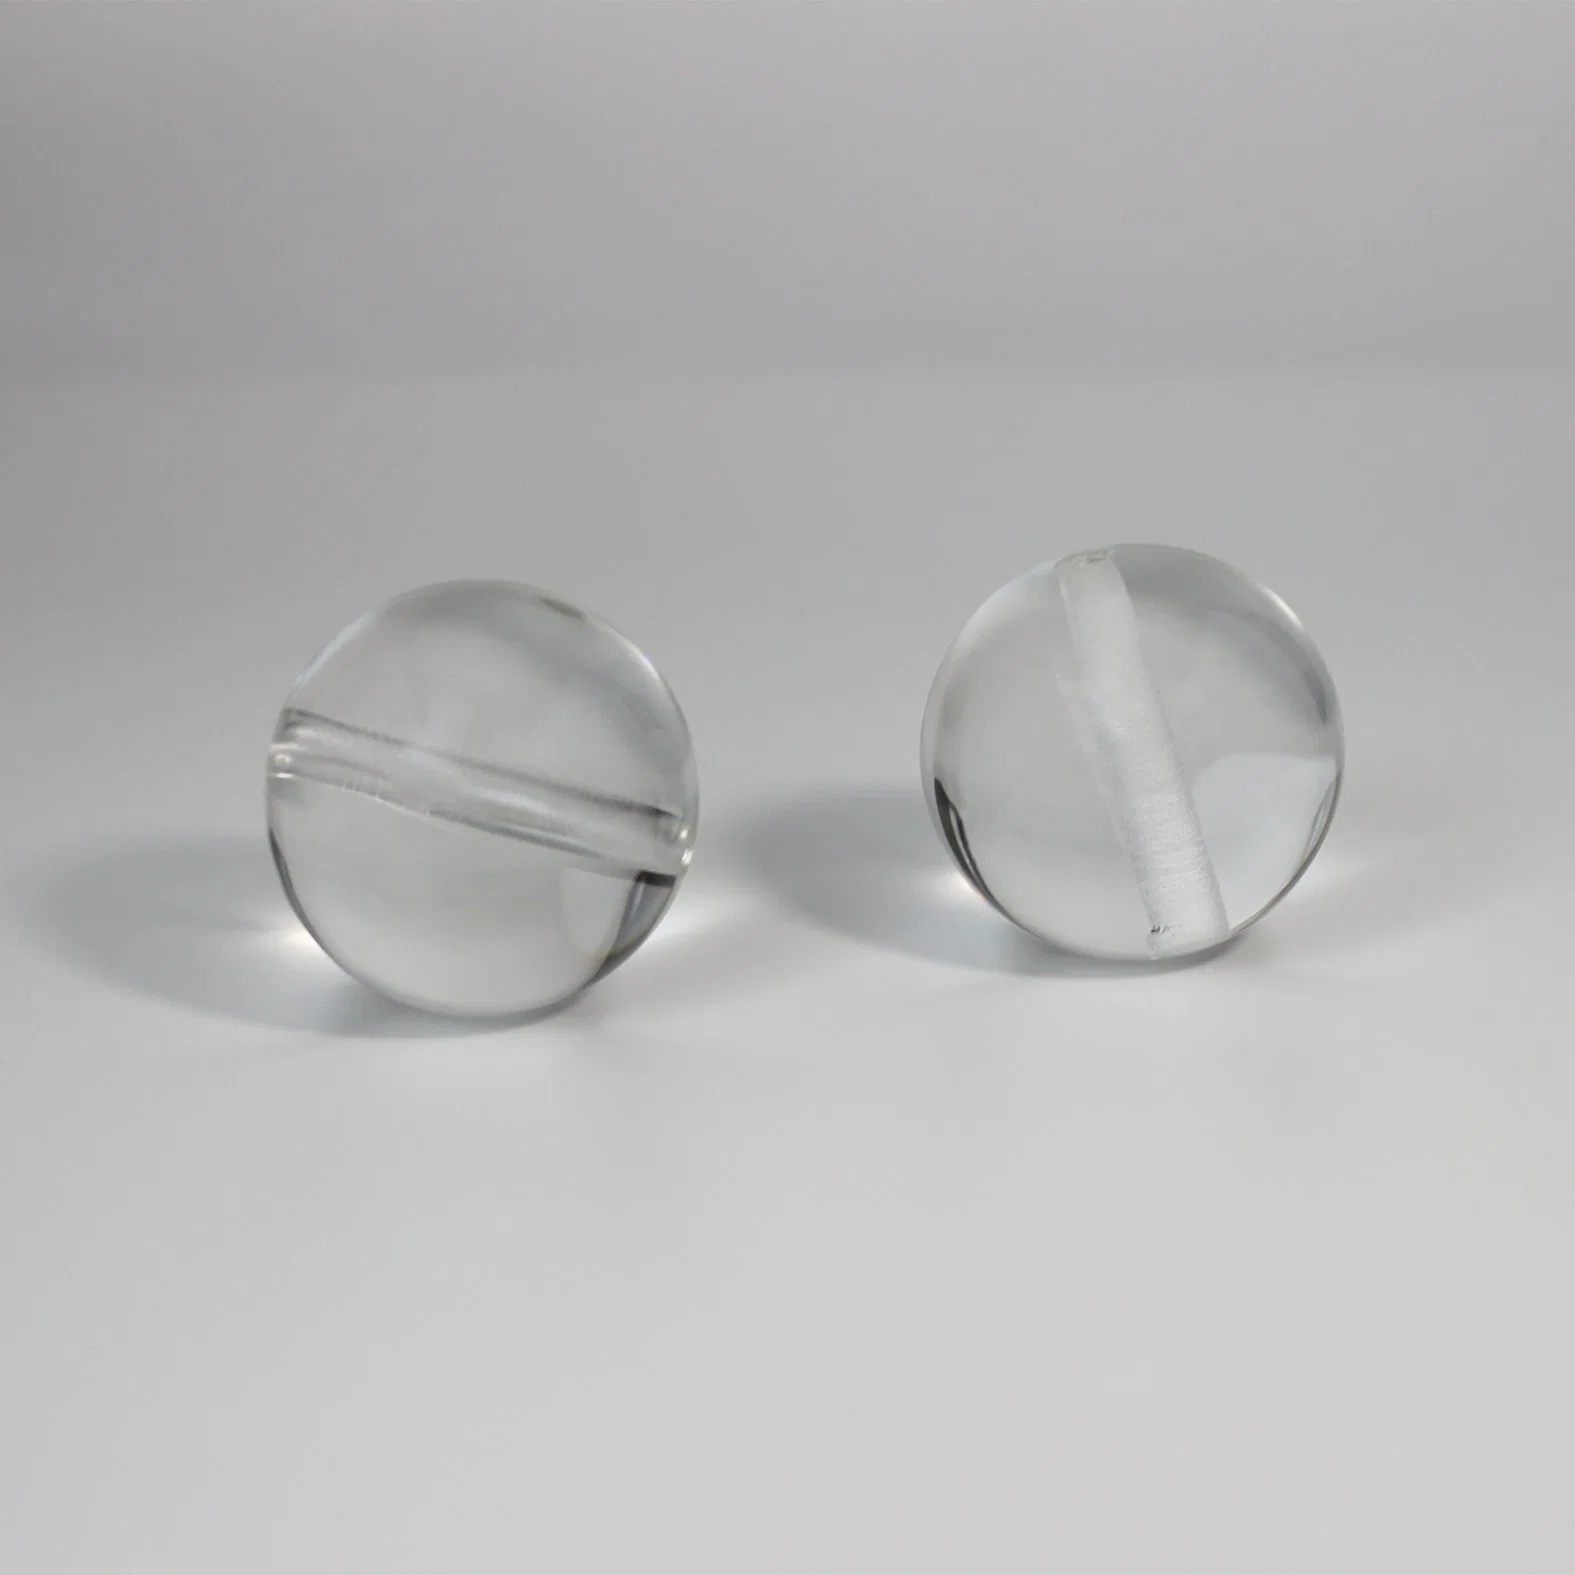 China Factory Optical Glass Ball Lens Hemisphere Glass Lens with Hole